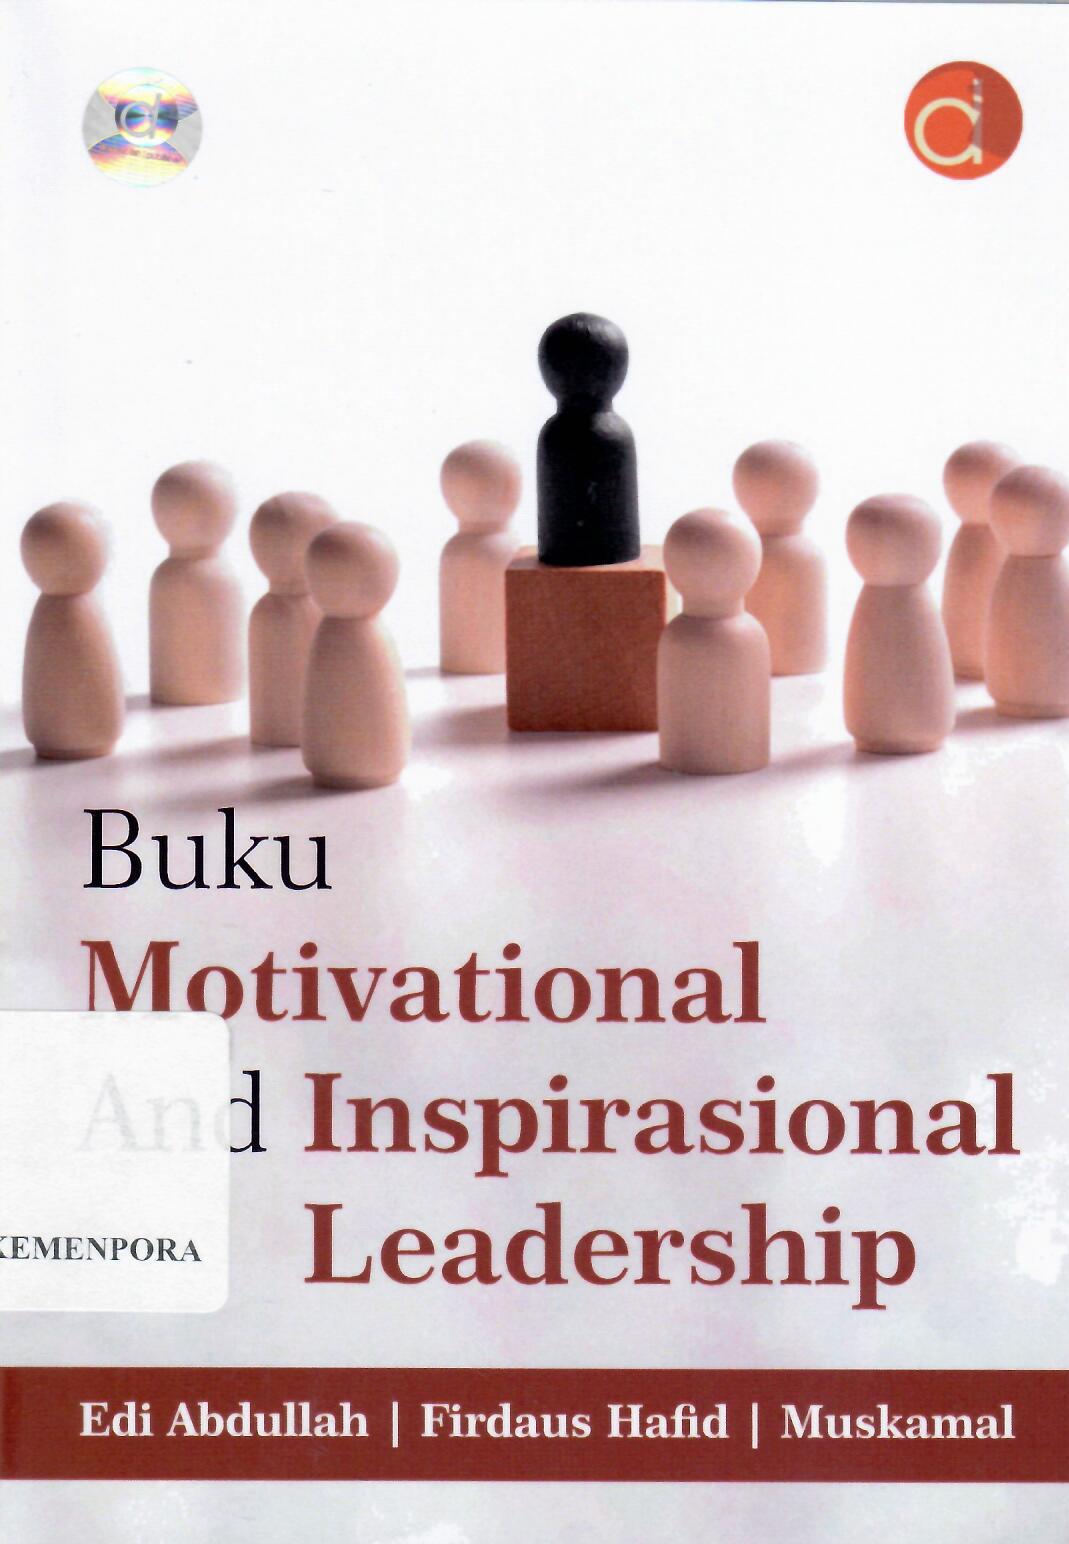 Buku Motivational and Inspirational Leadership